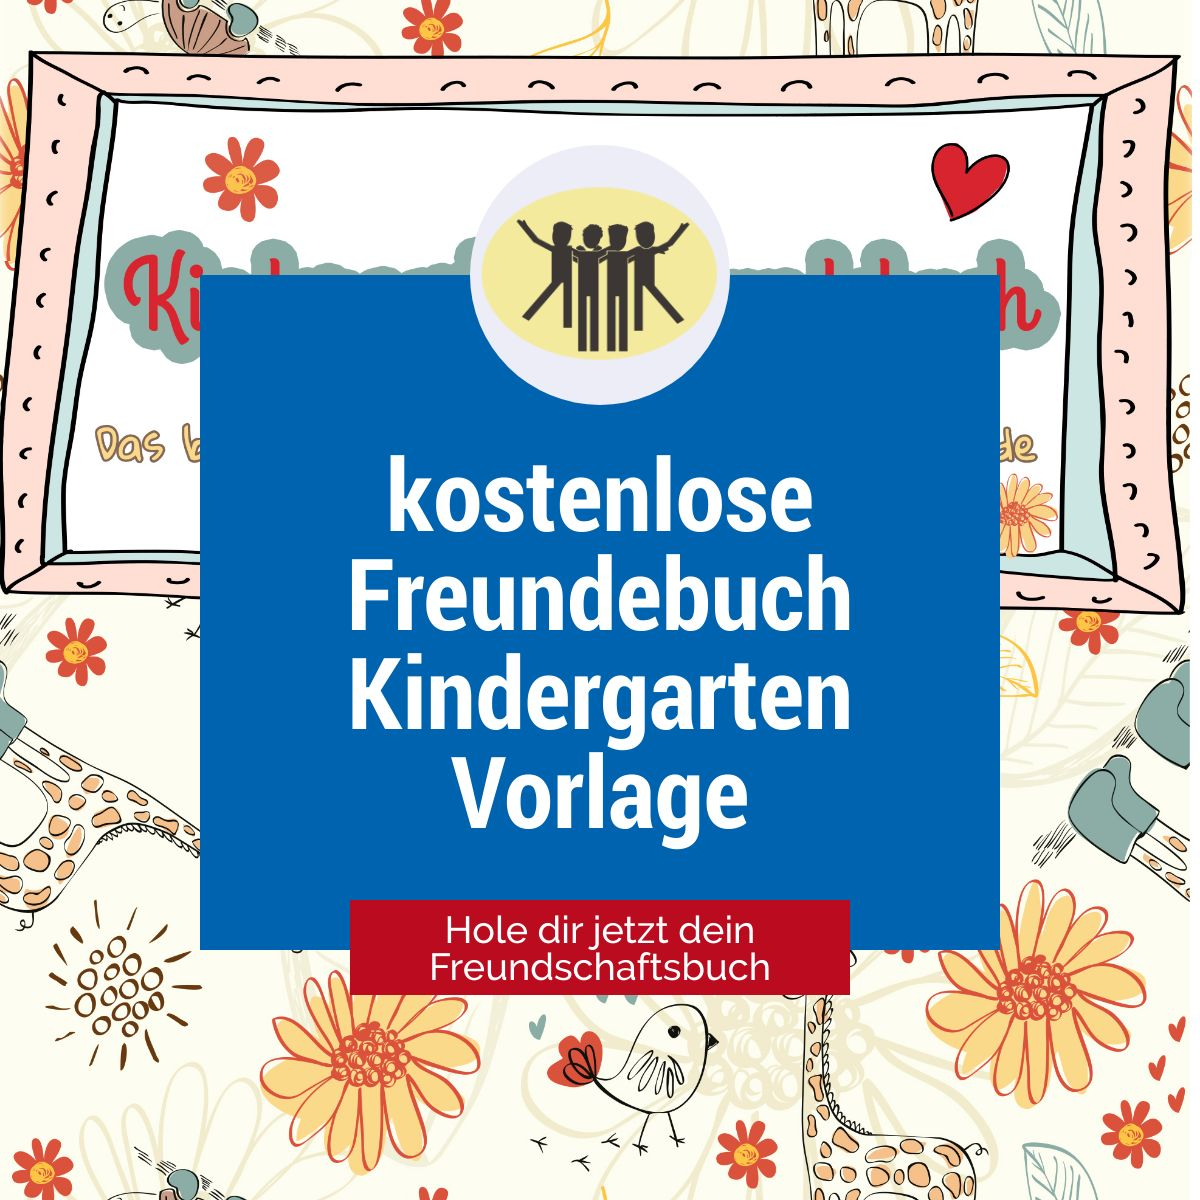 36+ Sprueche fuer freundebuch kindergarten info